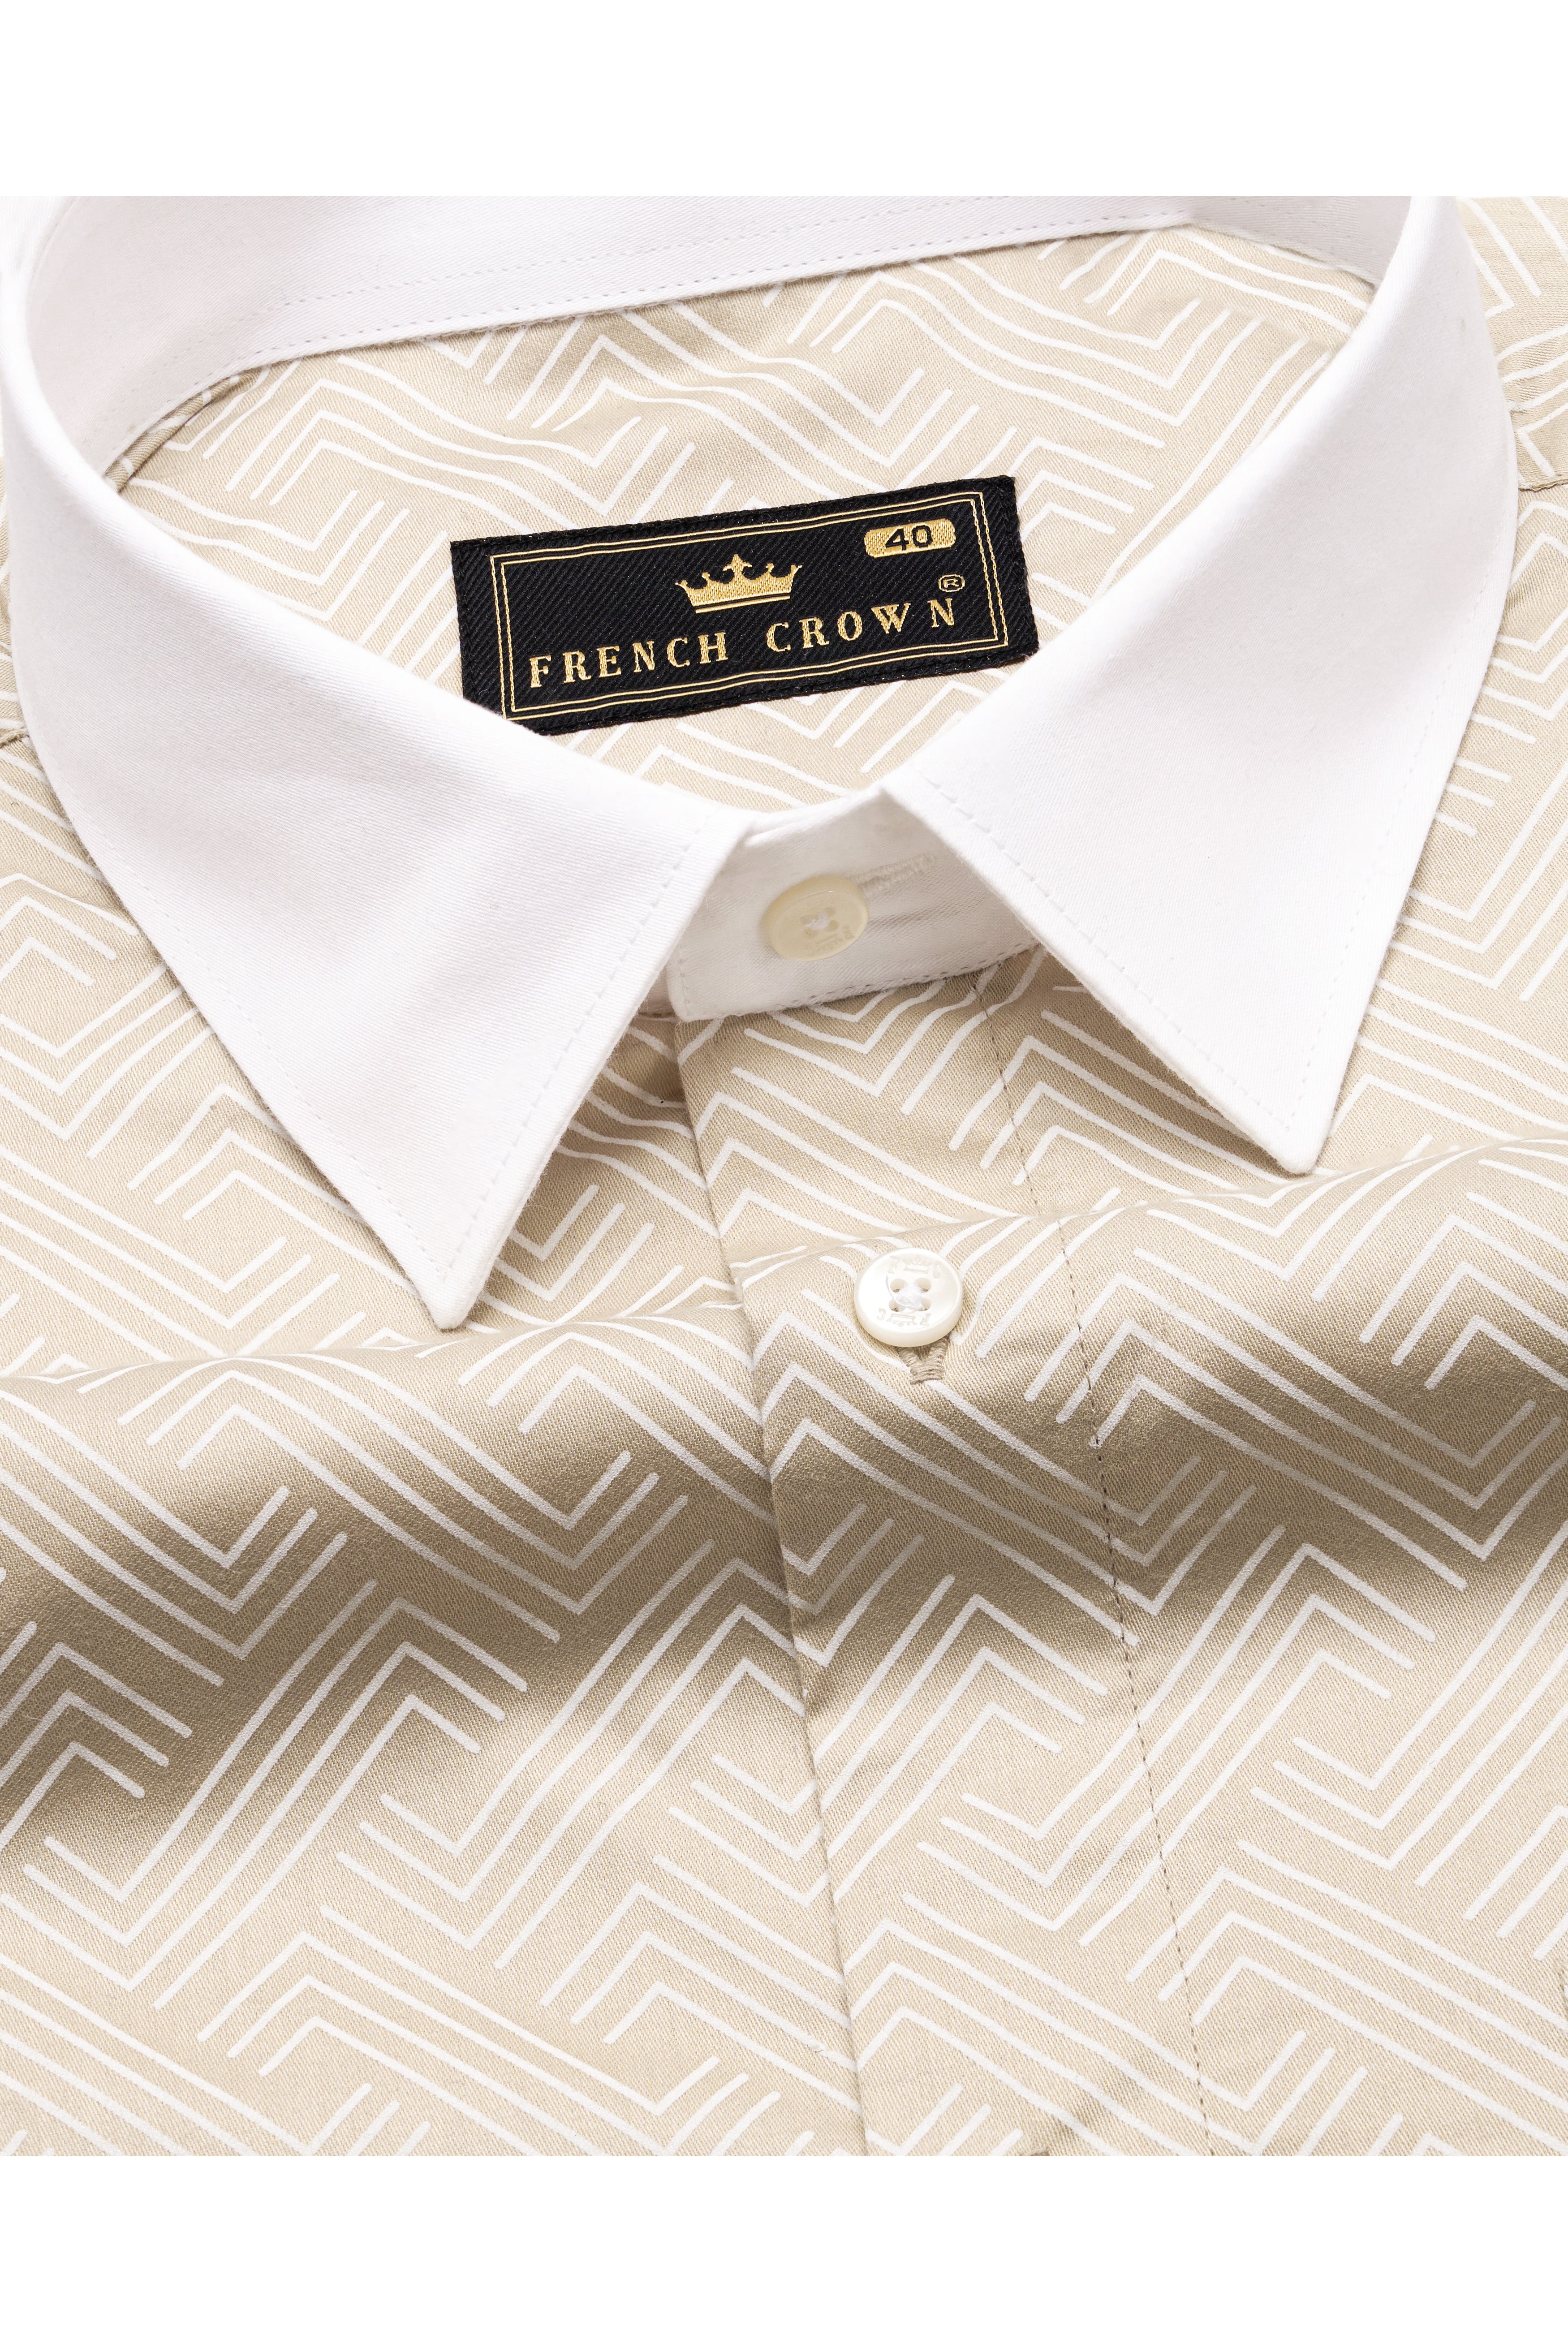 Hampton Brown with White Cuffs and Collar Super Soft Premium Cotton Shirt